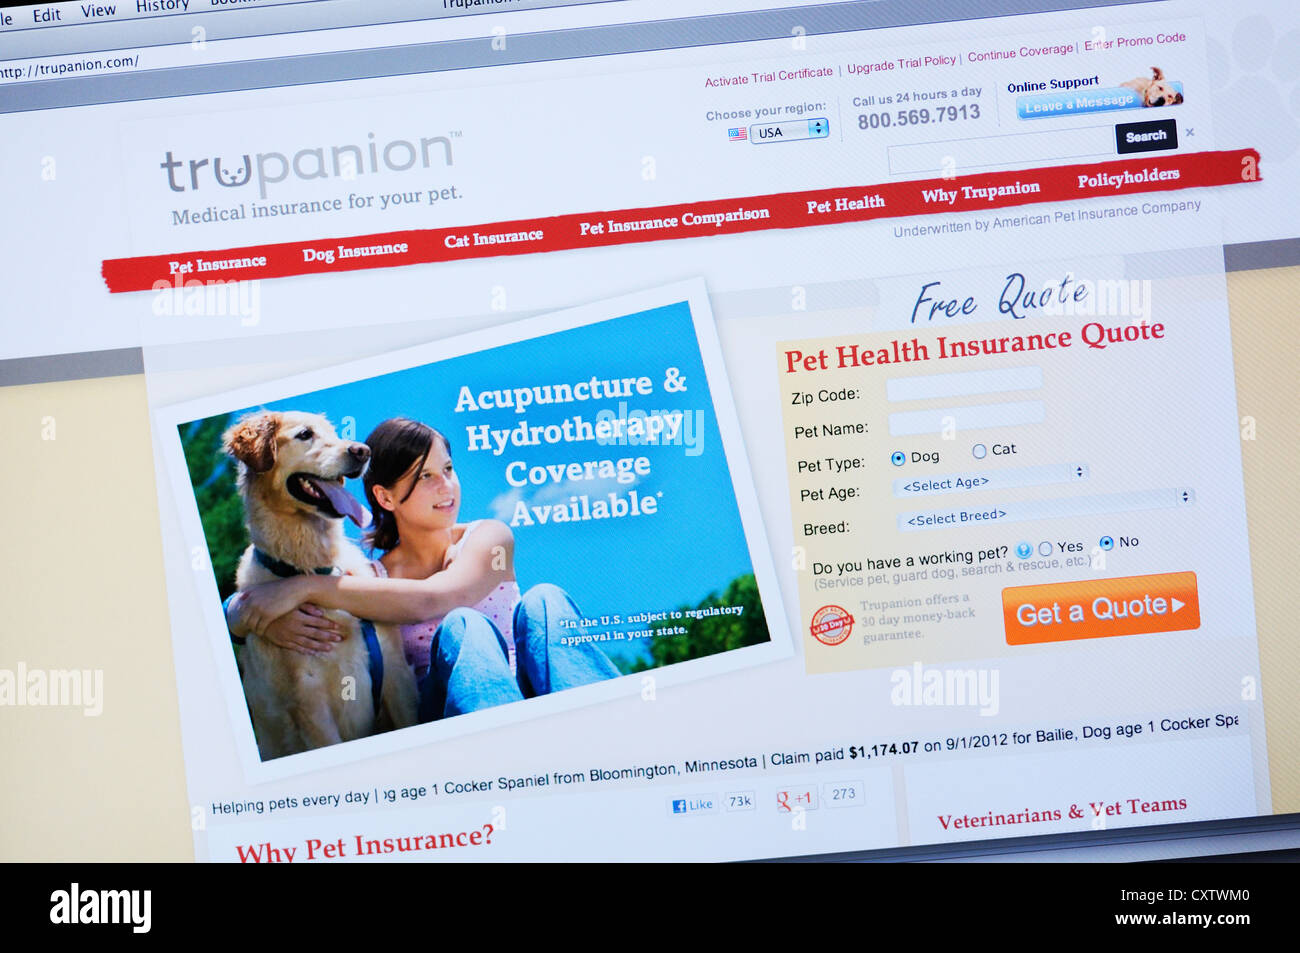 Trupanion website - pet health insurance Stock Photo